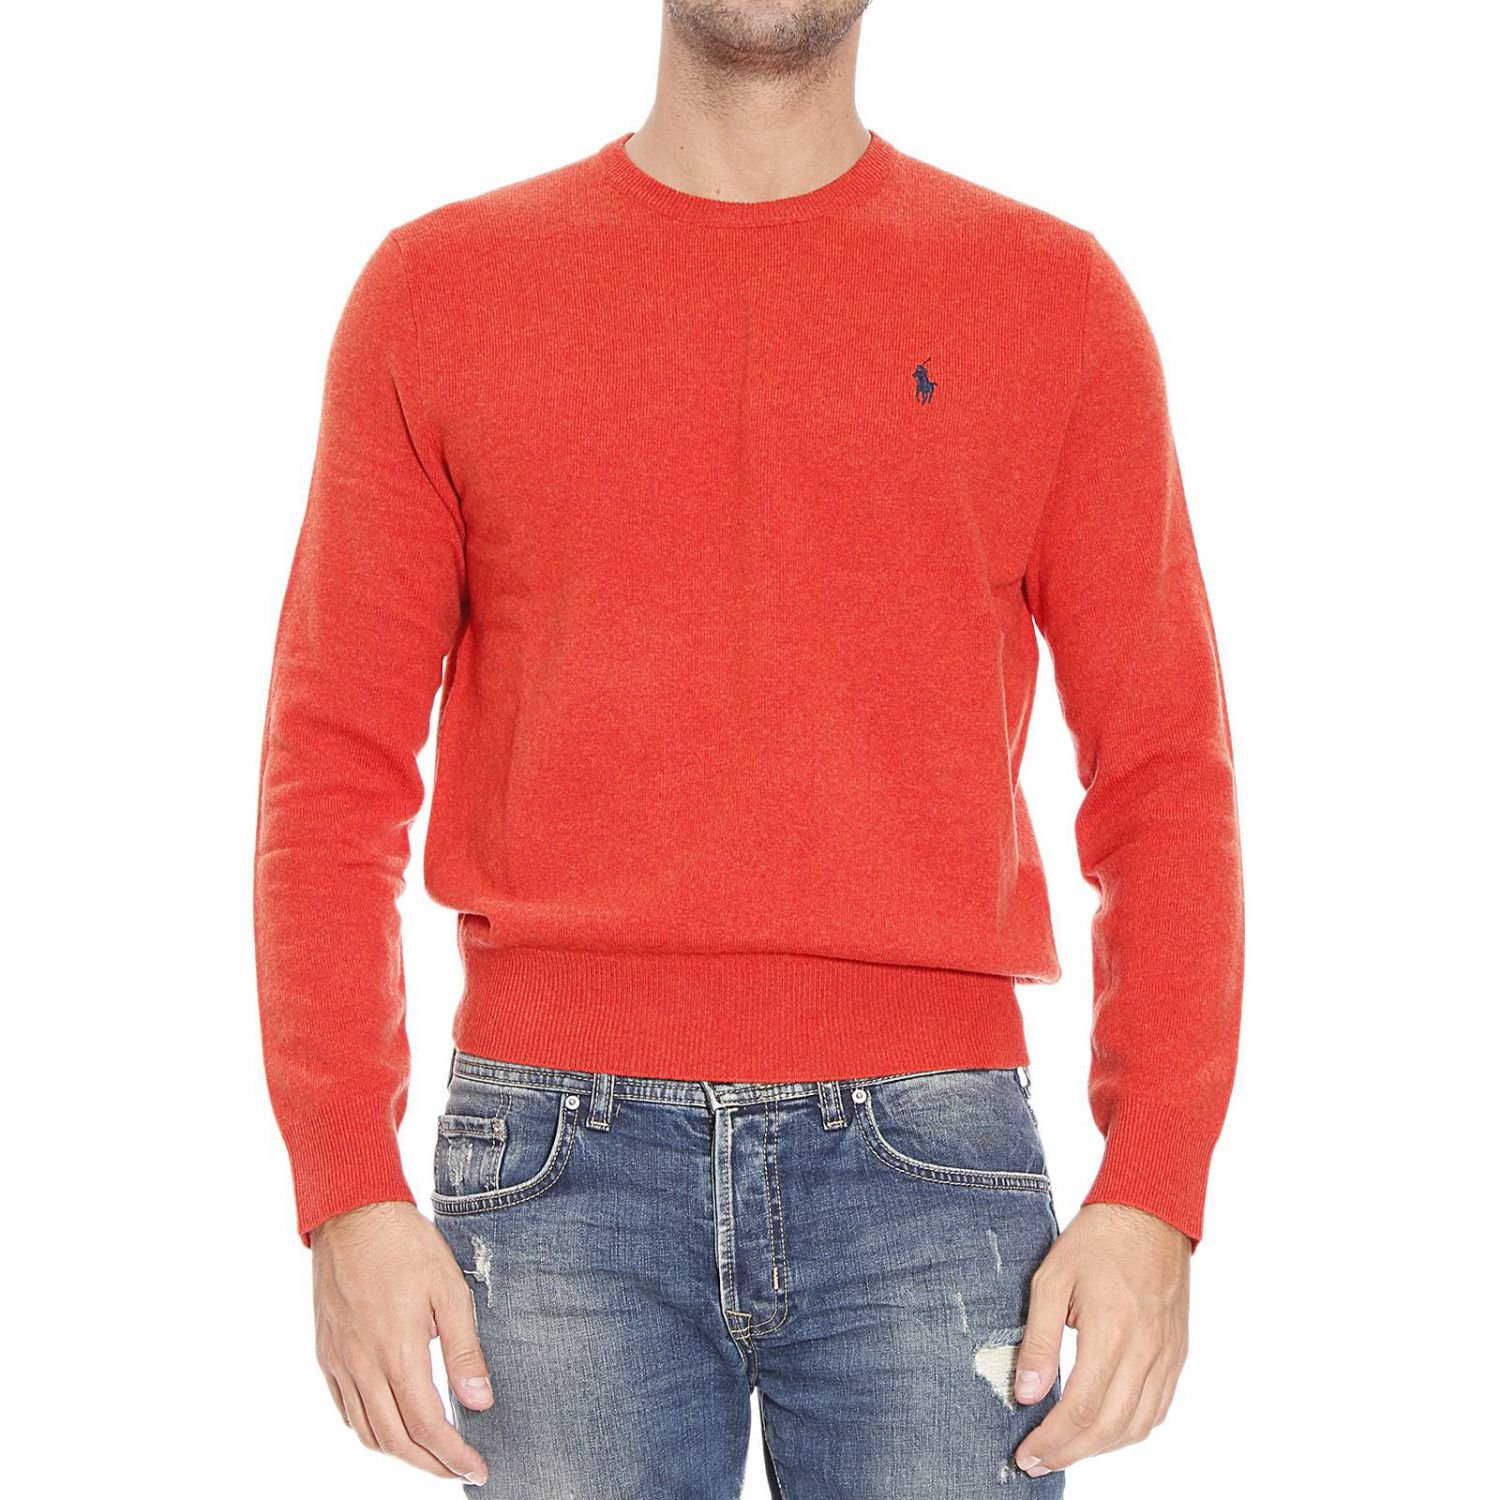 Lyst - Polo Ralph Lauren Sweater in Orange for Men